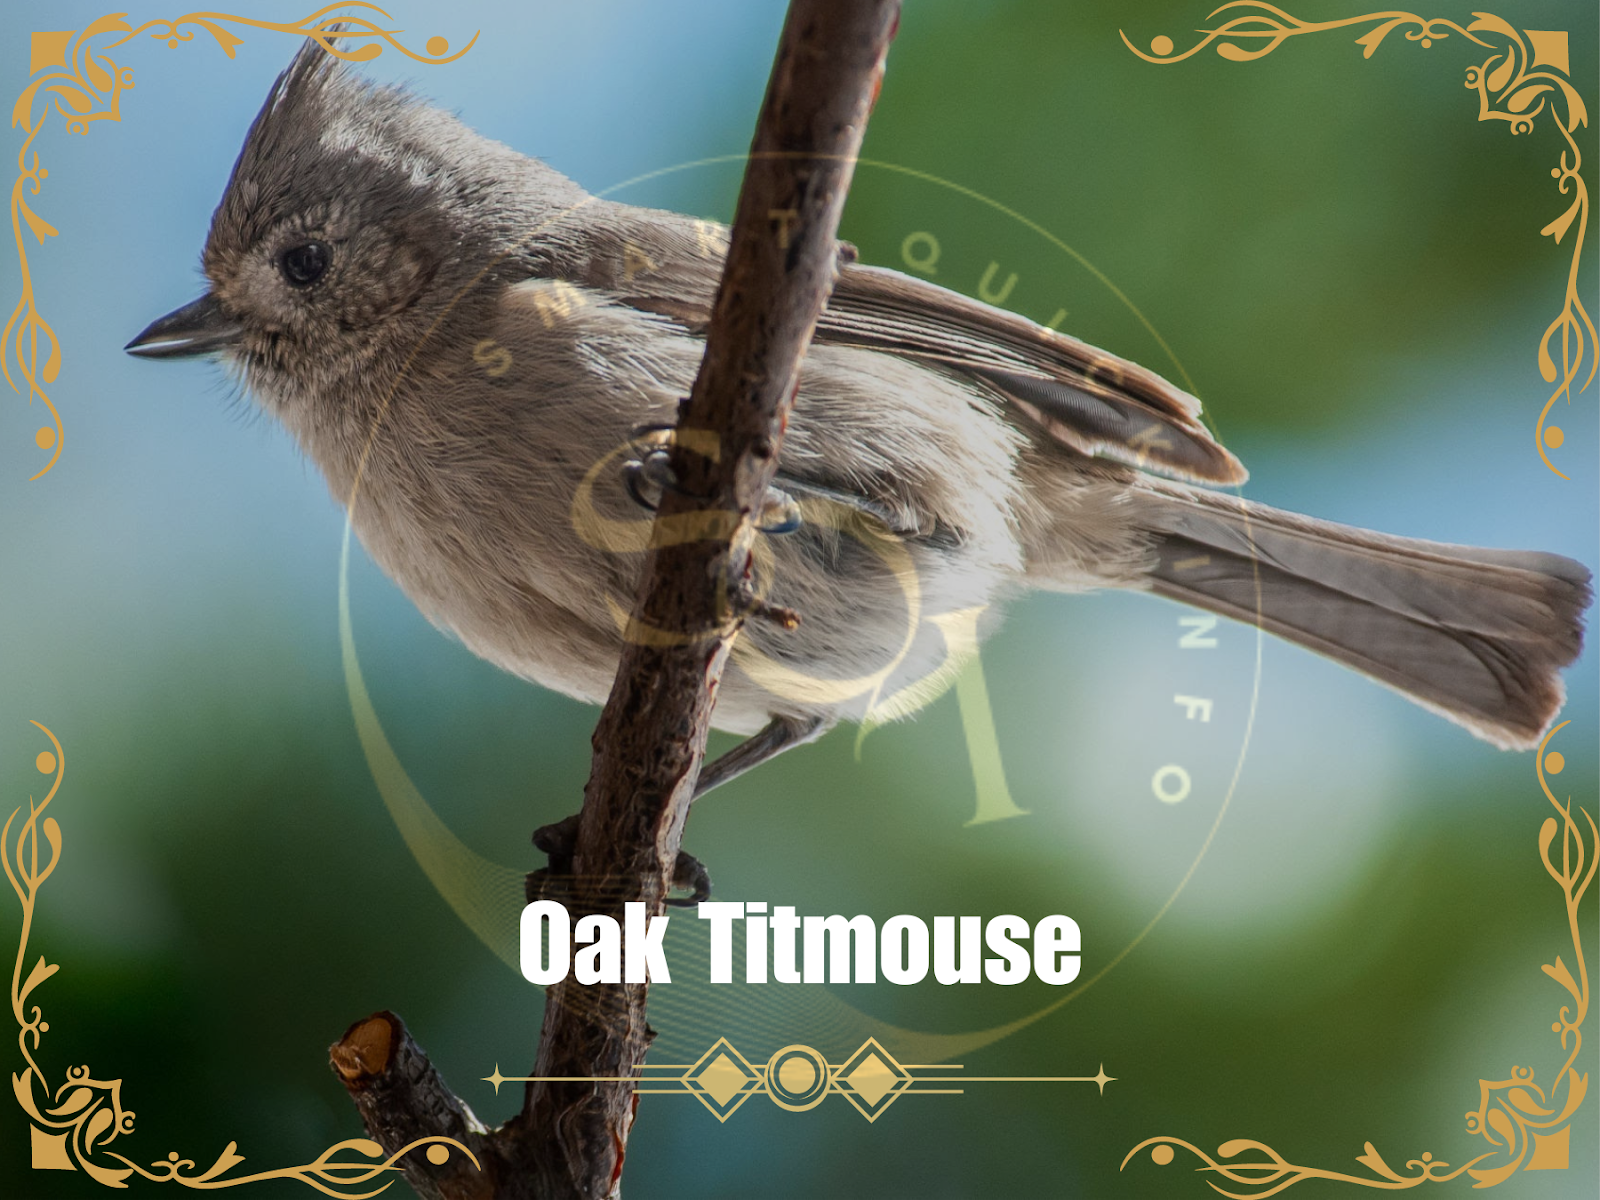 Oak Titmouse